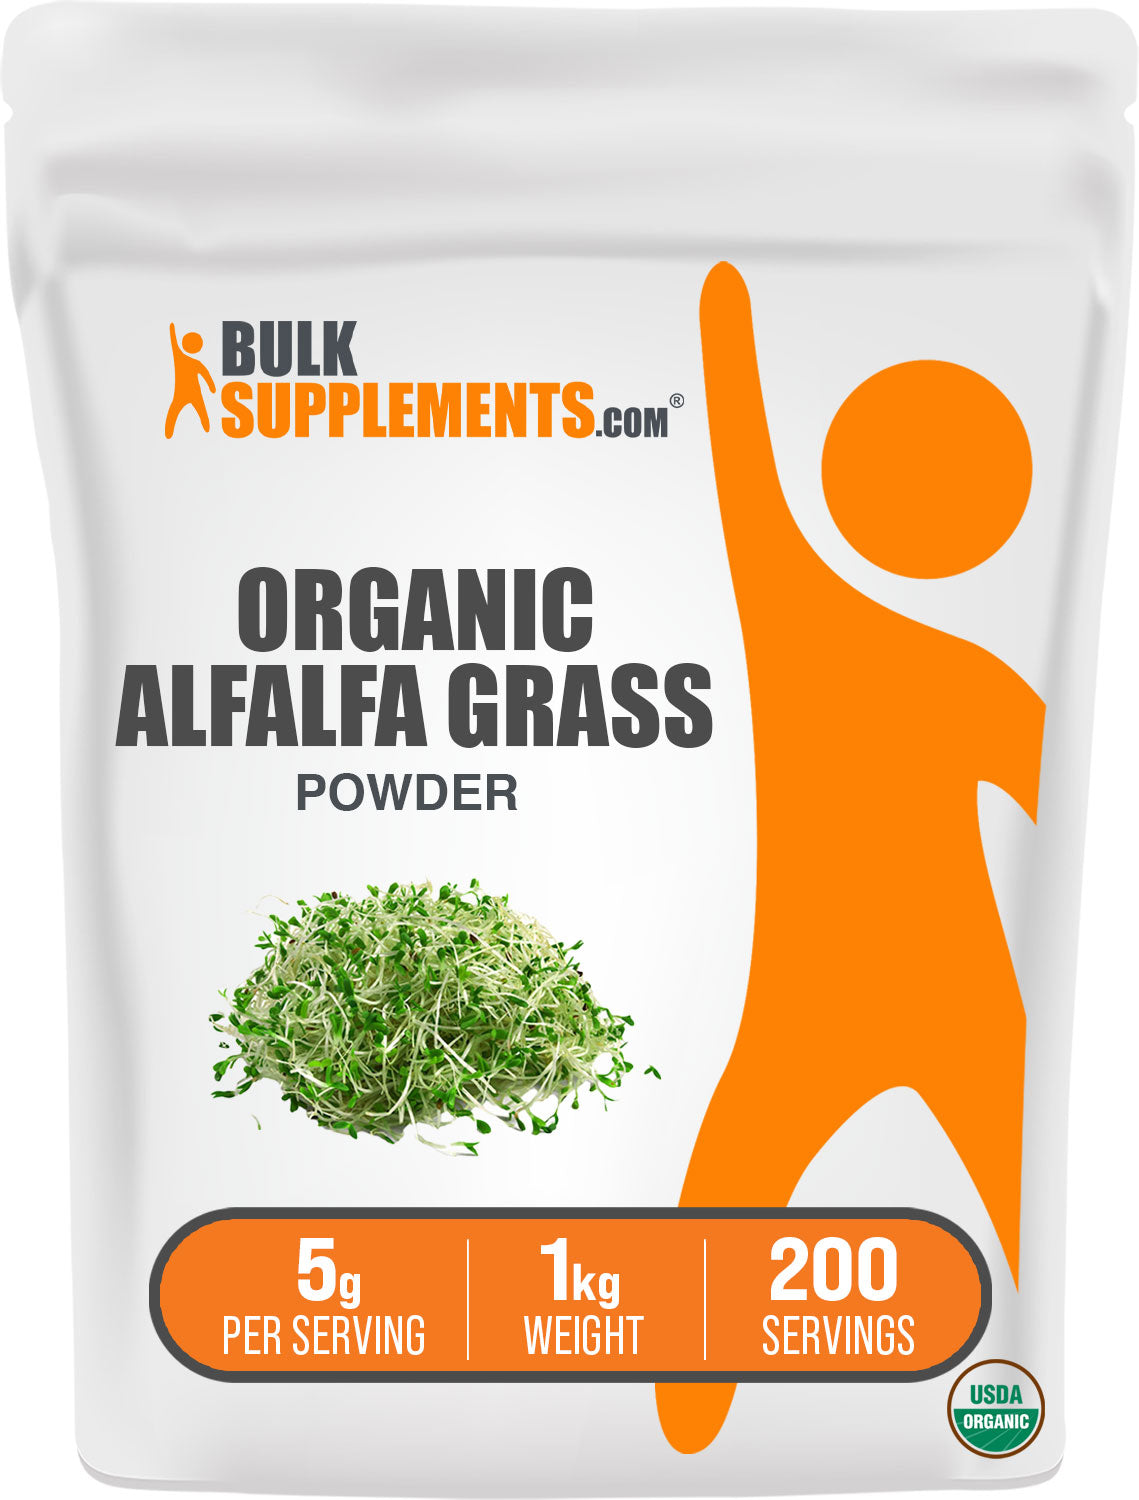 BulkSupplements.com Organic Alfalfa Grass Powder 1kg Bag